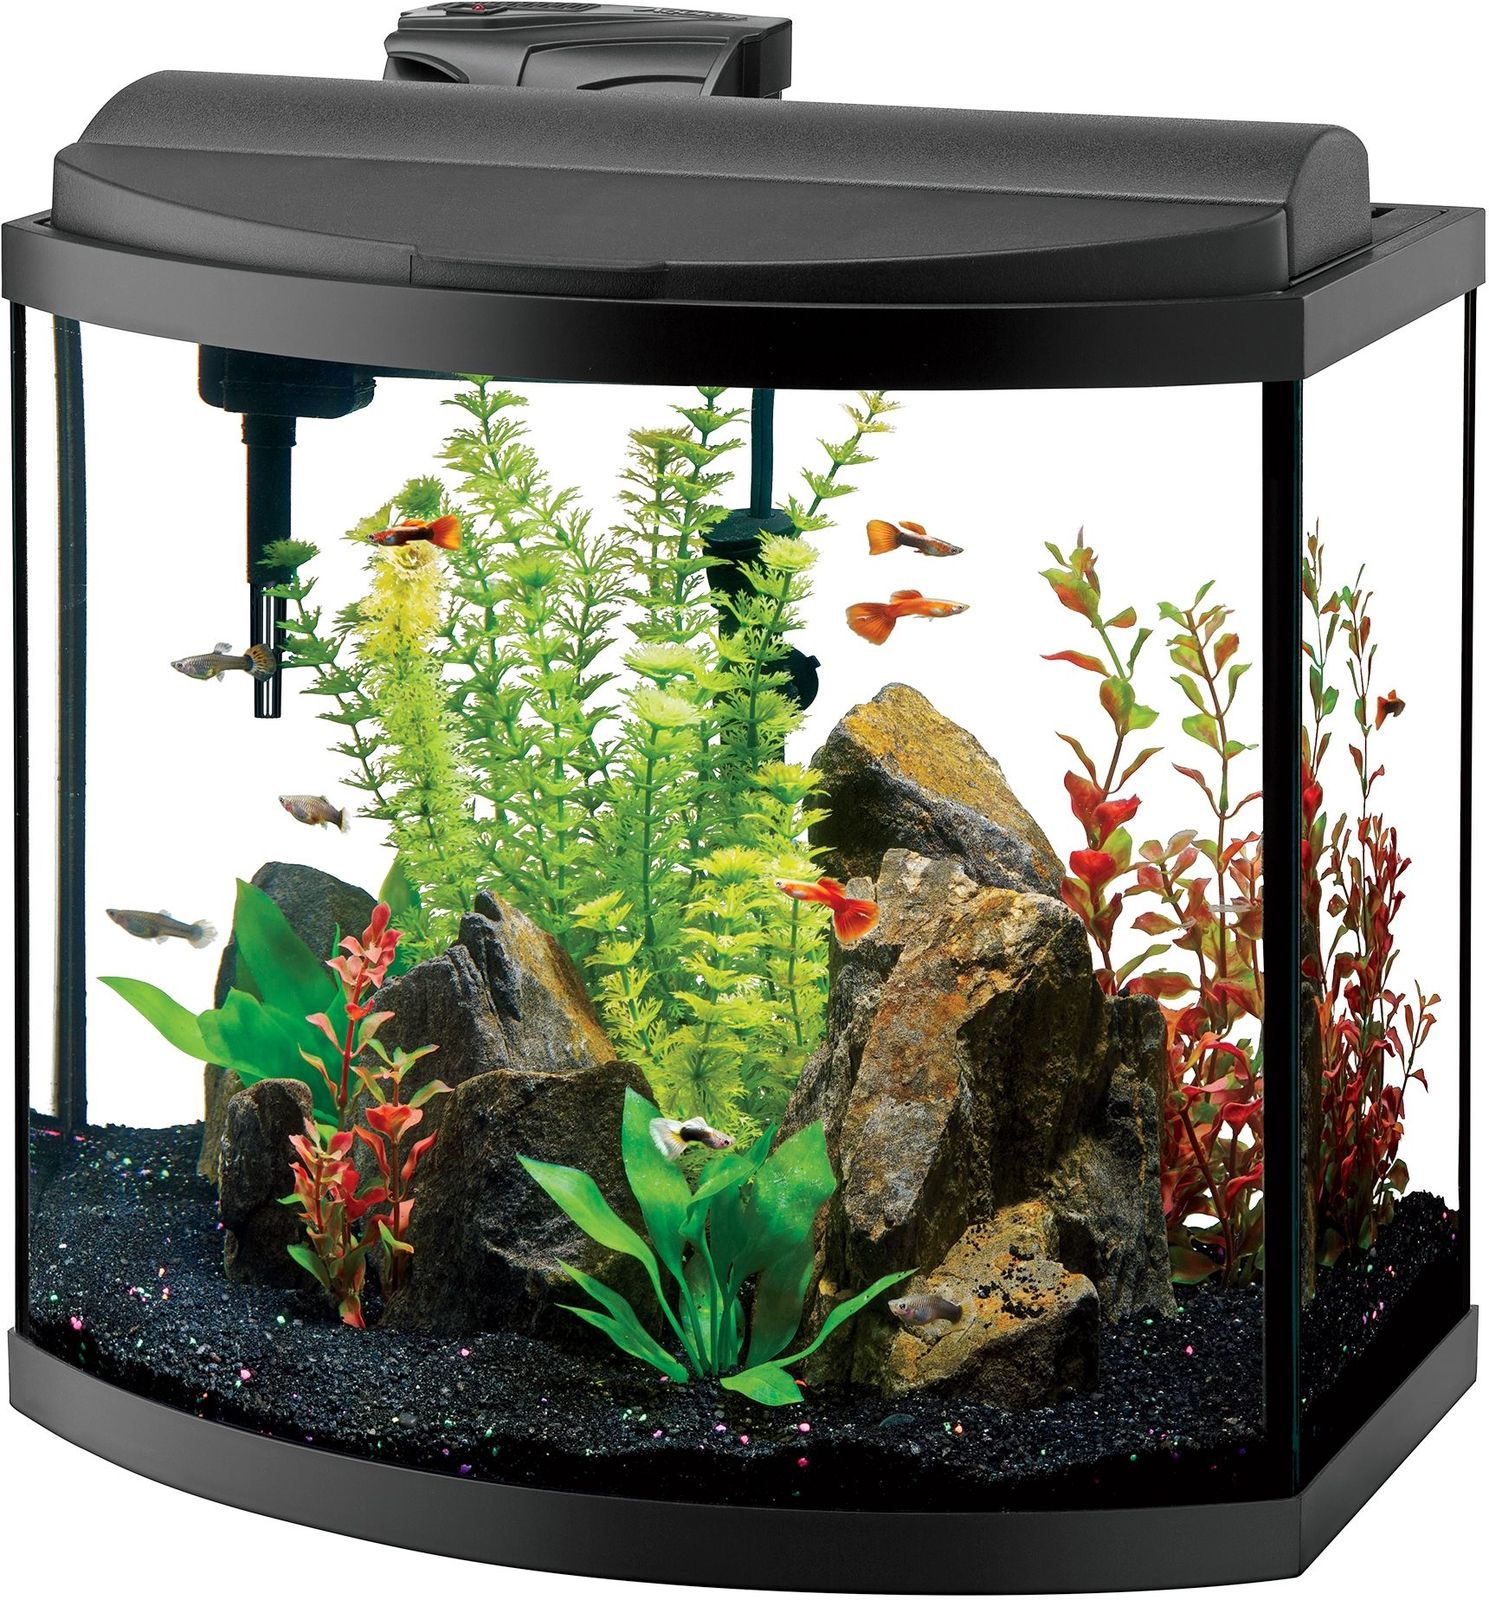 Aqueon Deluxe LED Bow Front Aquarium Kit Black 16 Gallon | eBay